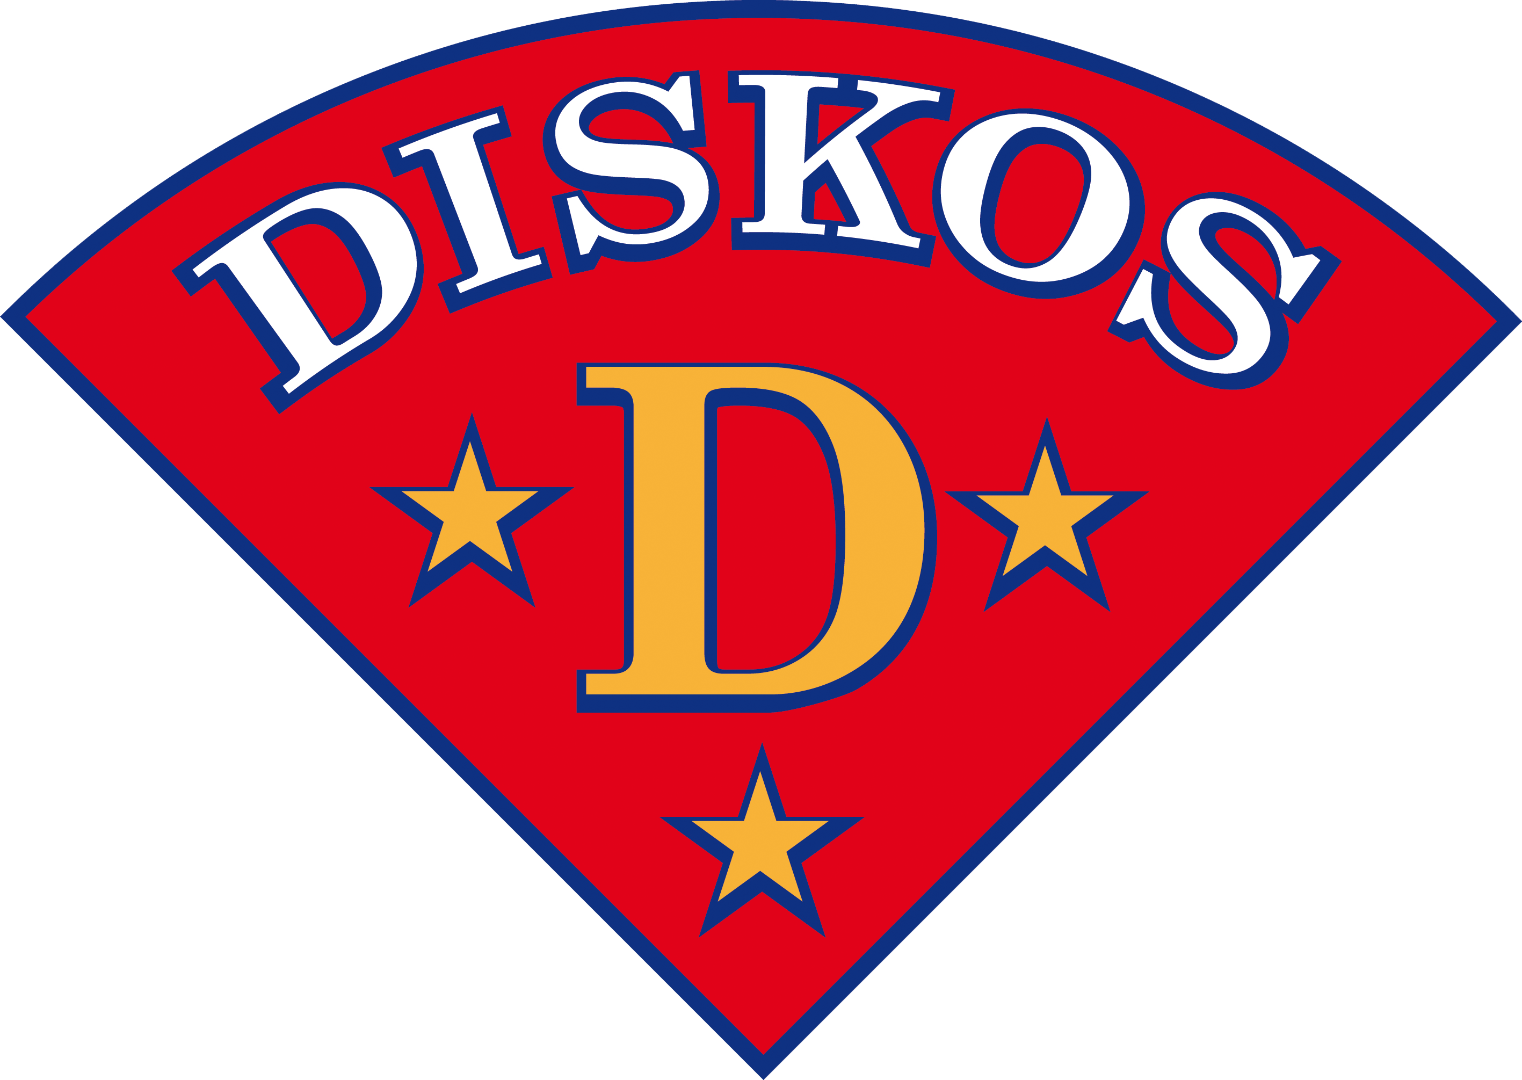 Diskos C2/-03 kaudella 2017-2018